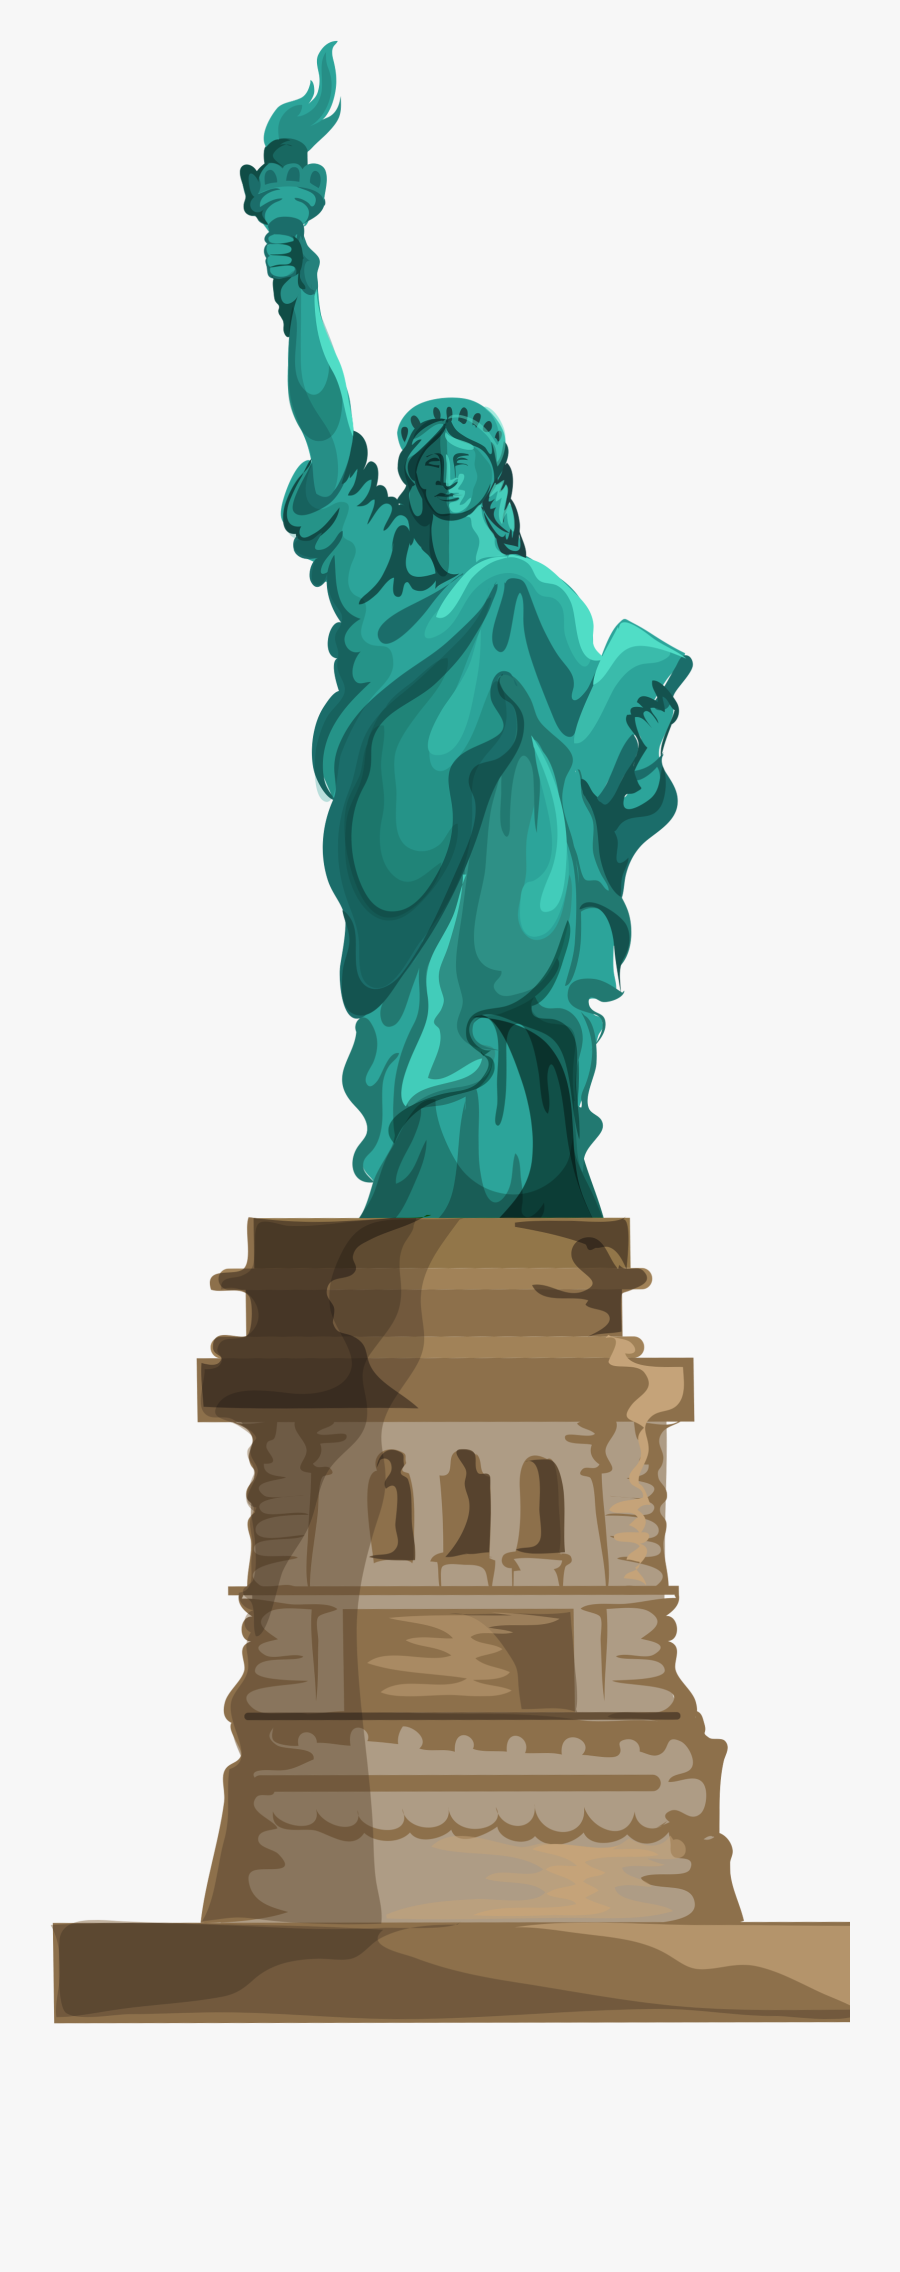 Transparent Statue Of Liberty Clipart - Statue Of Liberty New York Clipart, Transparent Clipart